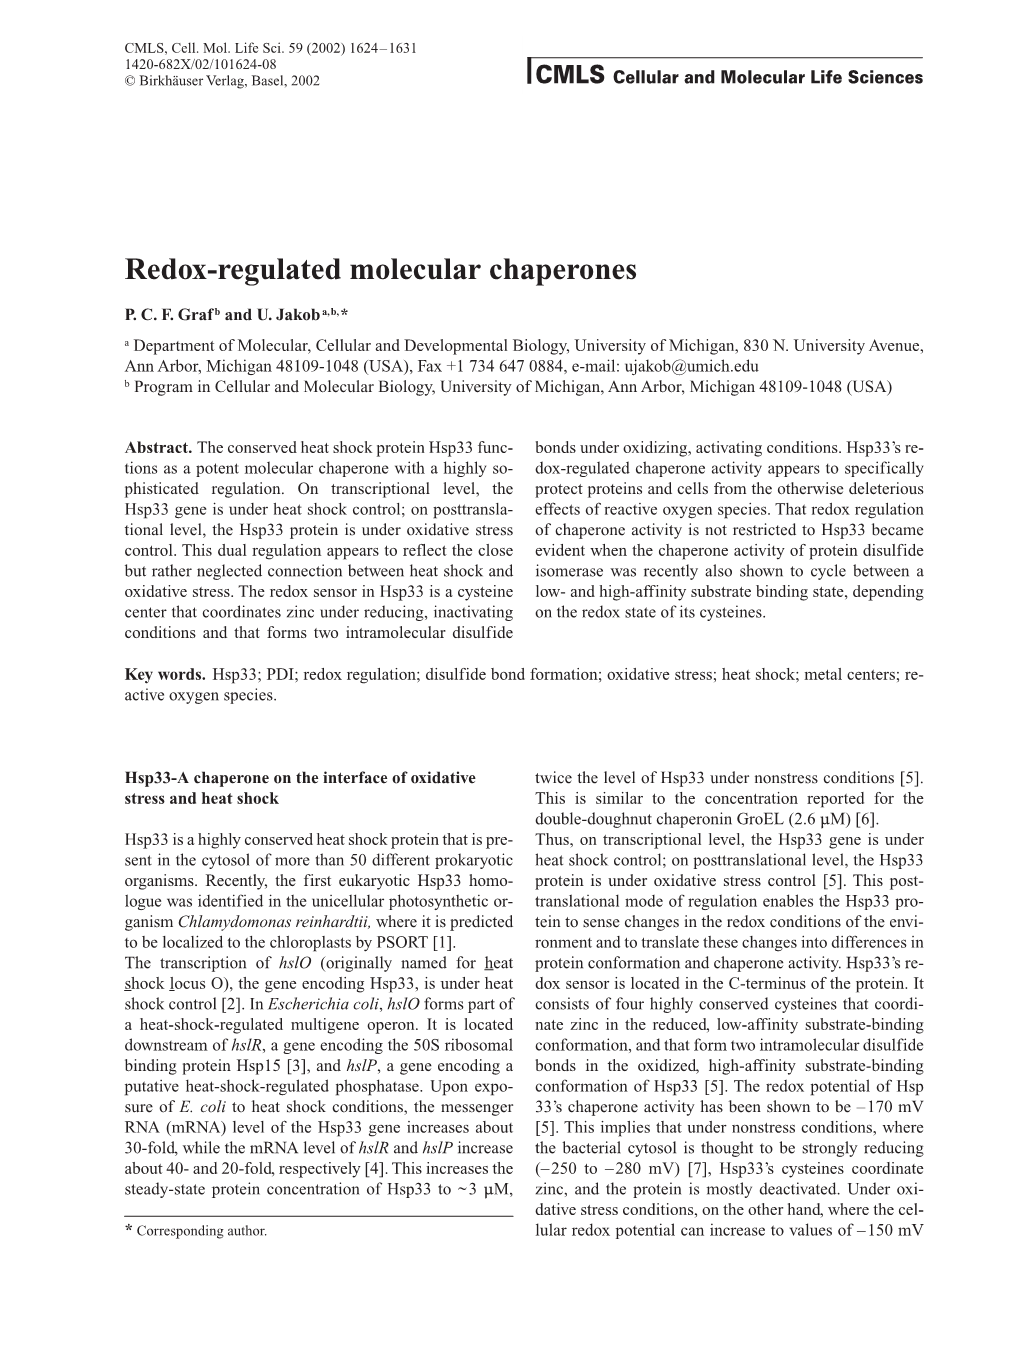 Redox-Regulated Molecular Chaperones